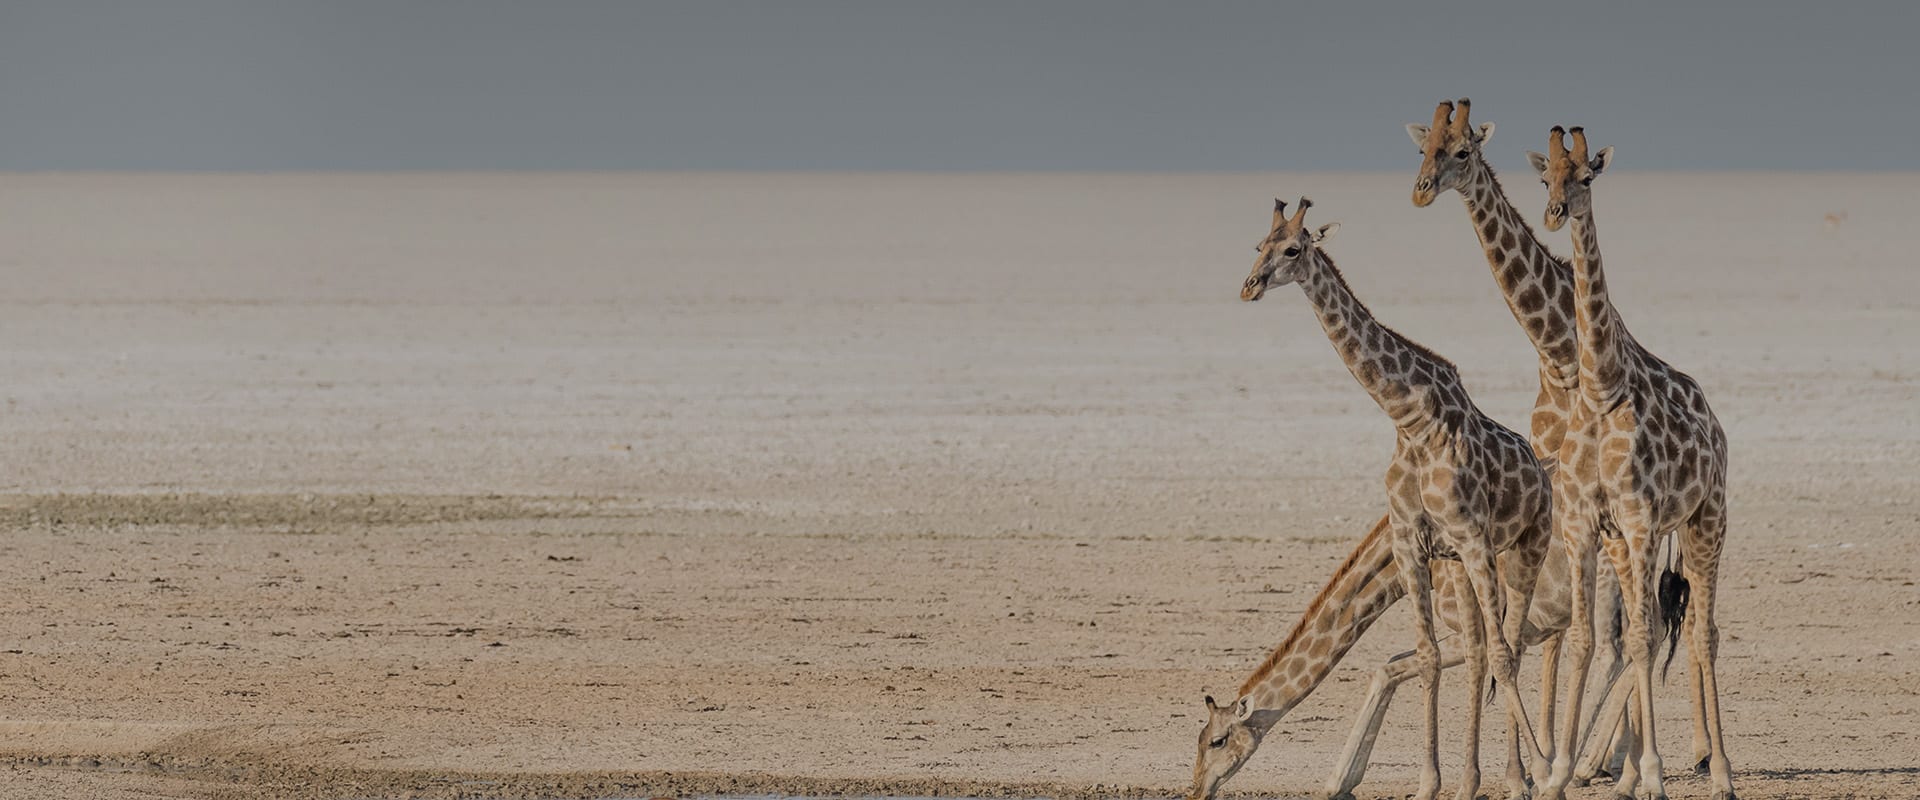 Giraffes drinking at Etosha in Namibia while on safari